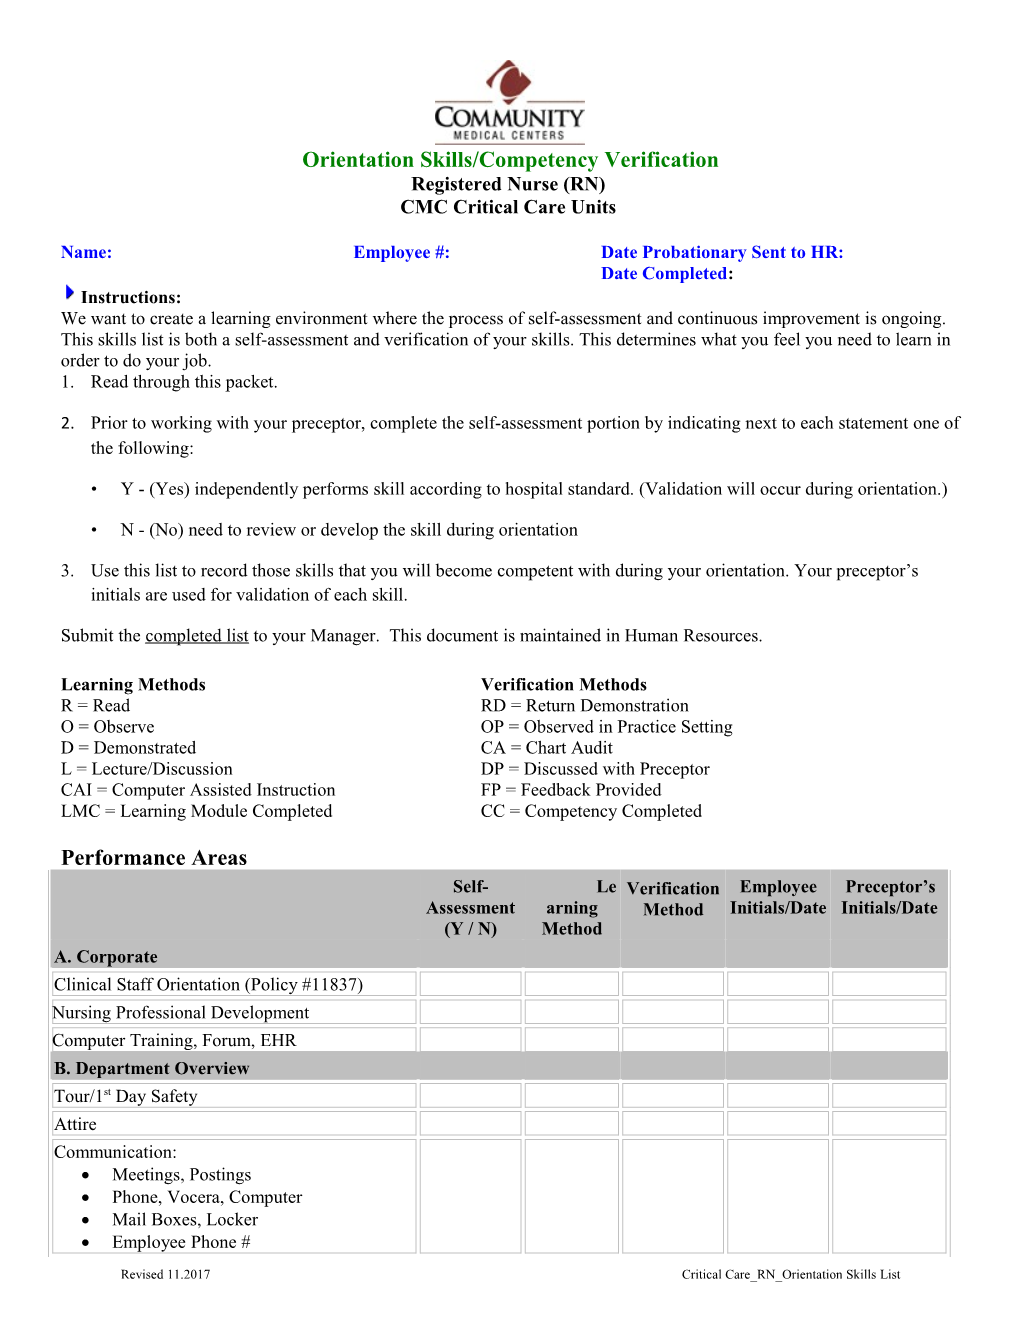 Orientation Skills/Competency Verification Registered Nurse (RN) CMC Critical Care Units